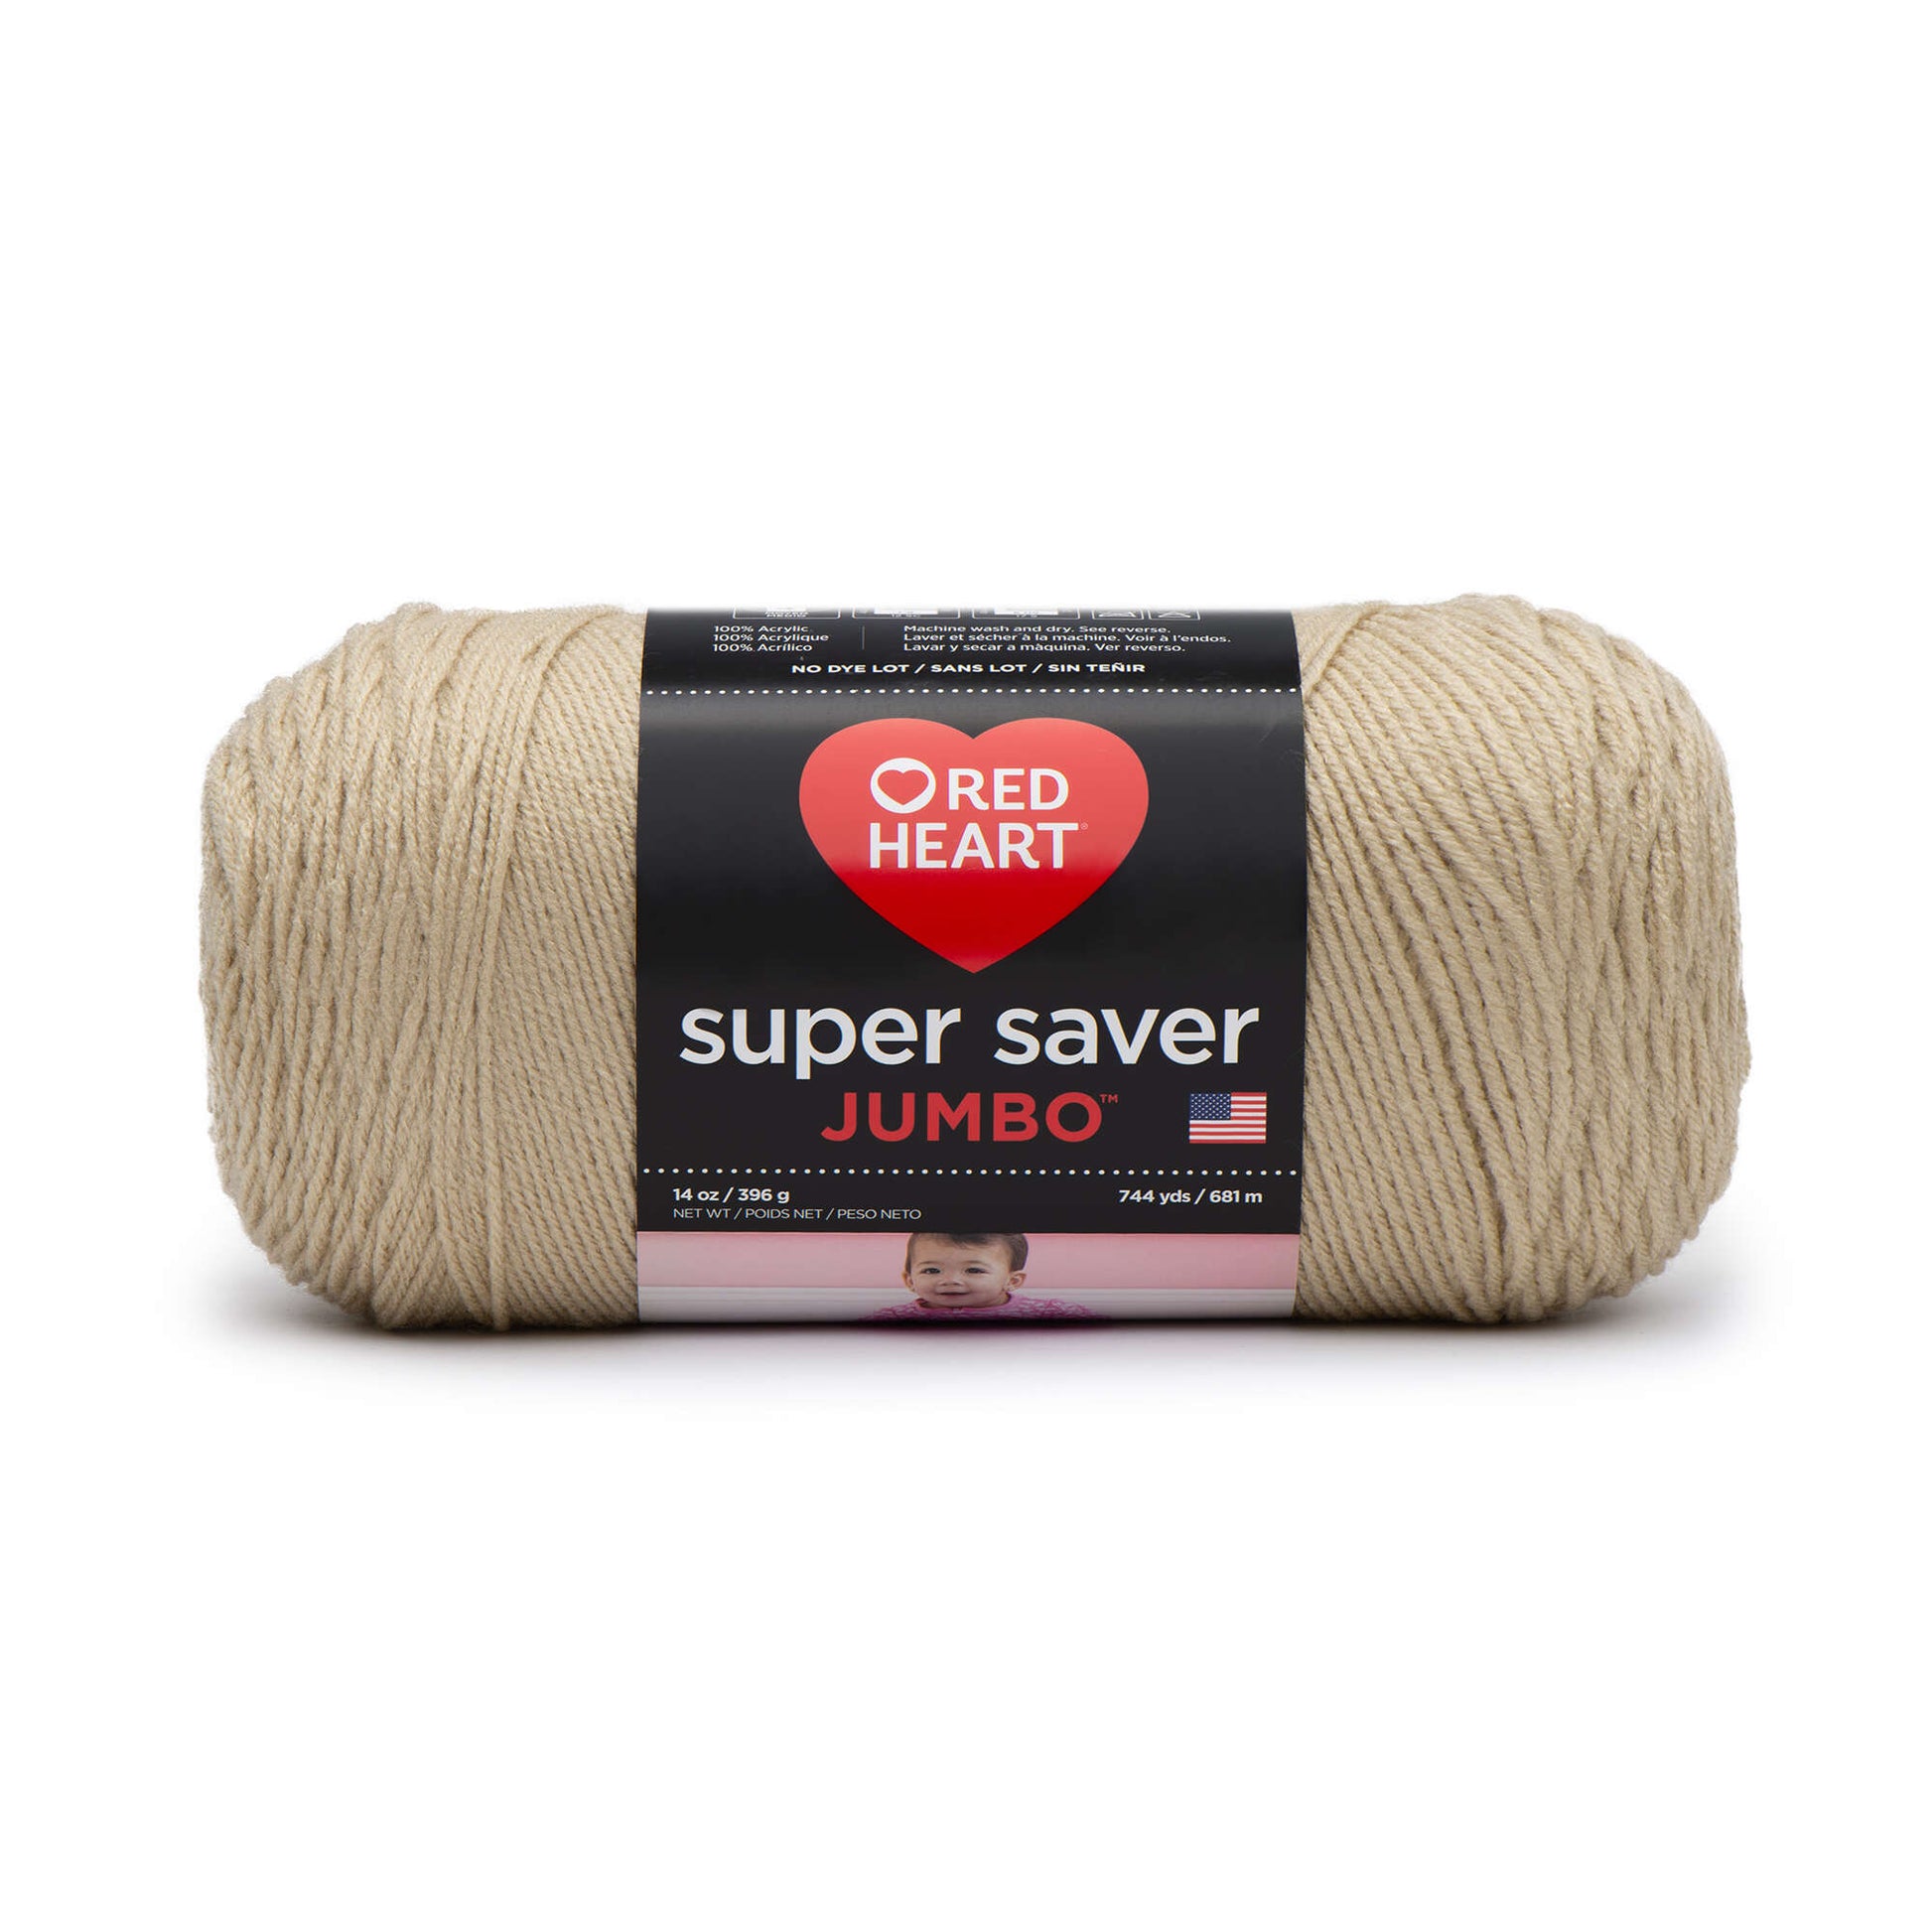 Red Heart Super Saver Jumbo Black Yarn - 2 Pack of 396g/14oz - Acrylic - 4 Medium (Worsted) - 744 Yards - Knitting/Crochet